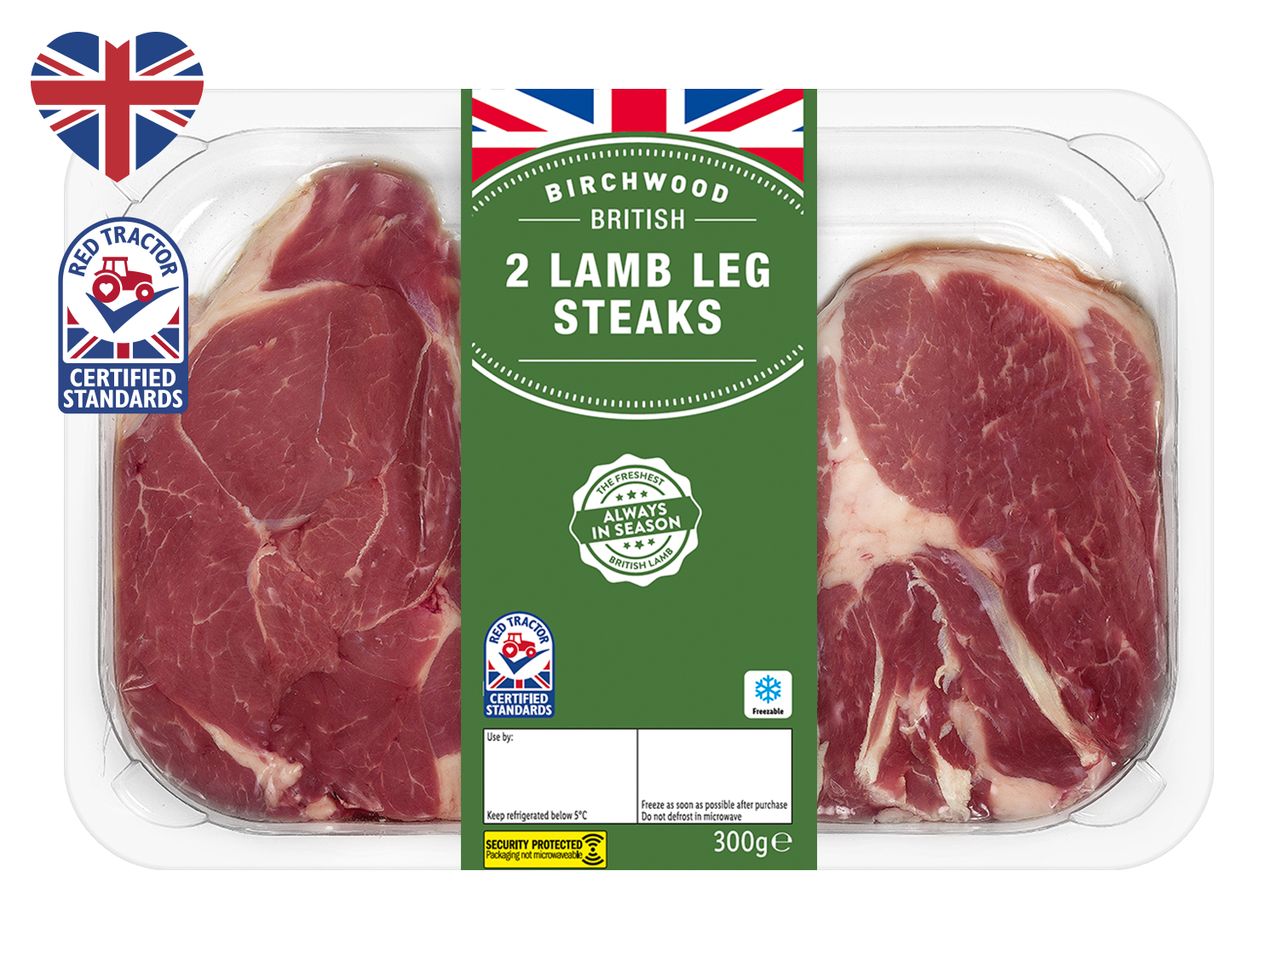 Go to full screen view: Birchwood British Lamb Leg Steaks - Image 1